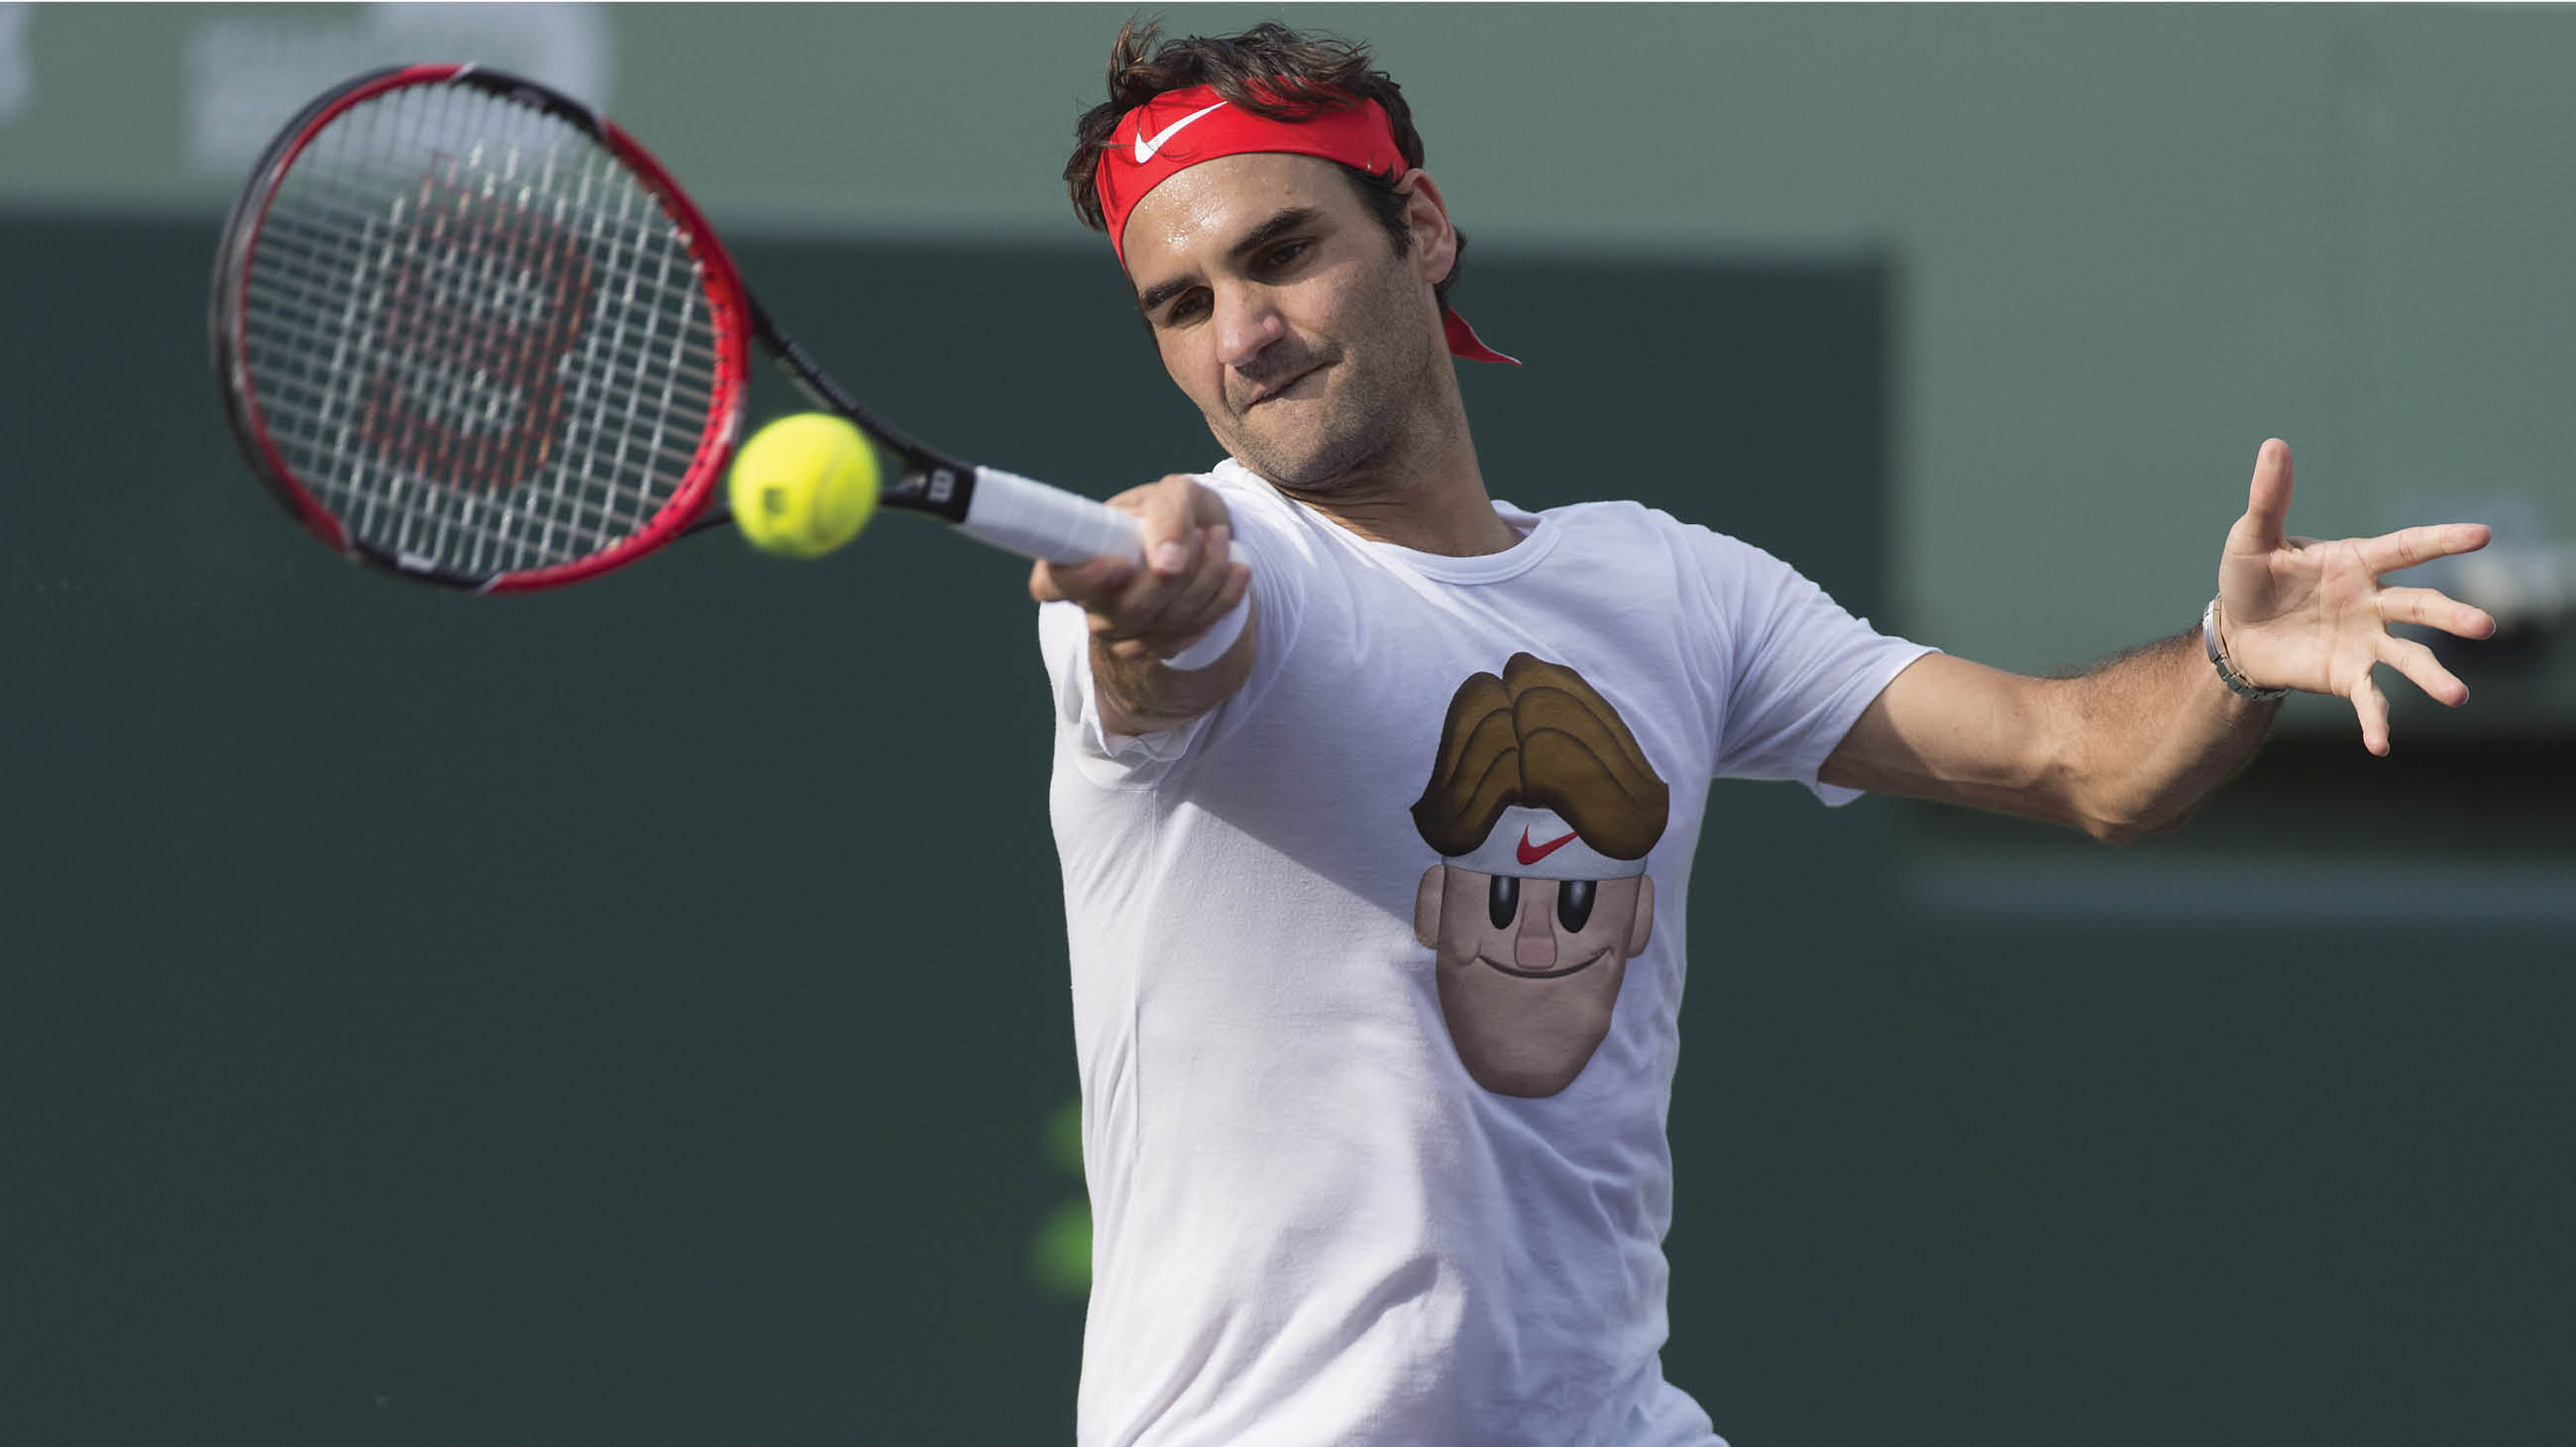 Federer's new Nike shirts